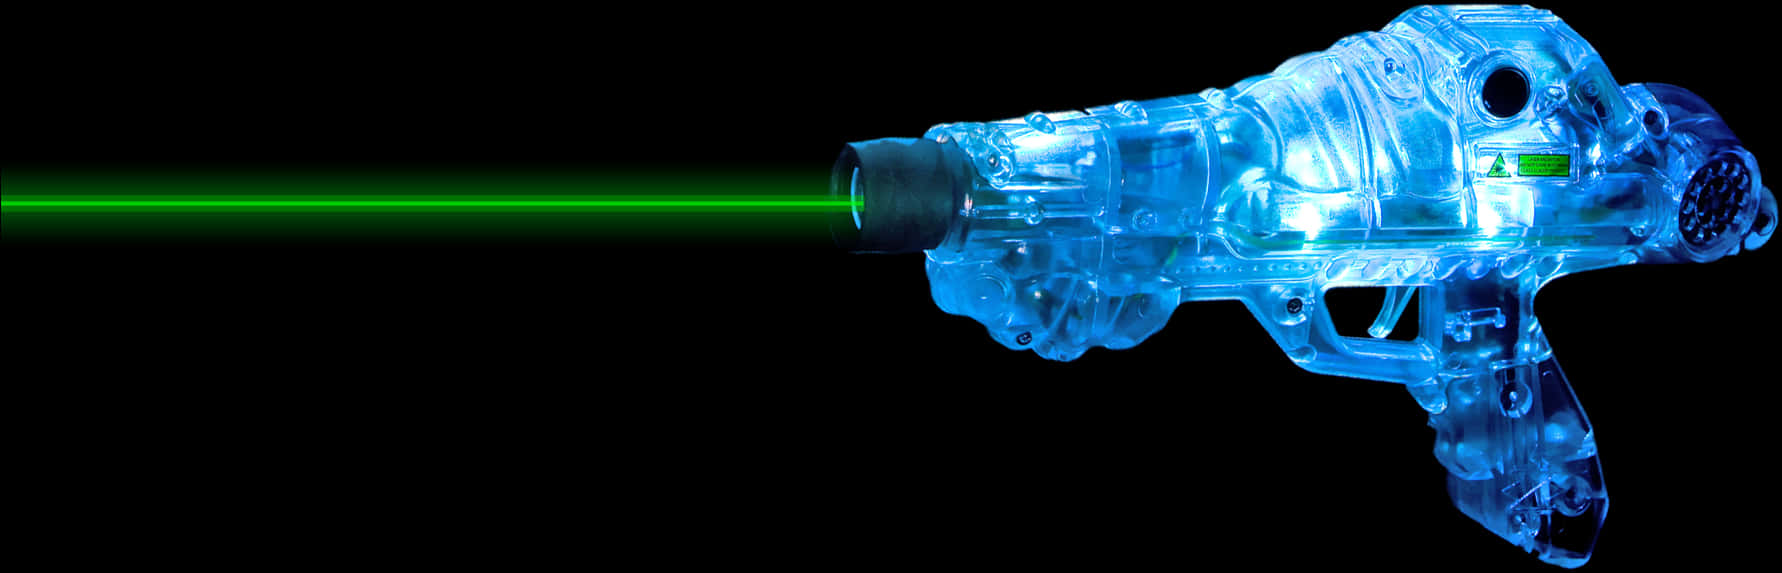 Futuristic Laser Gun Illustration PNG